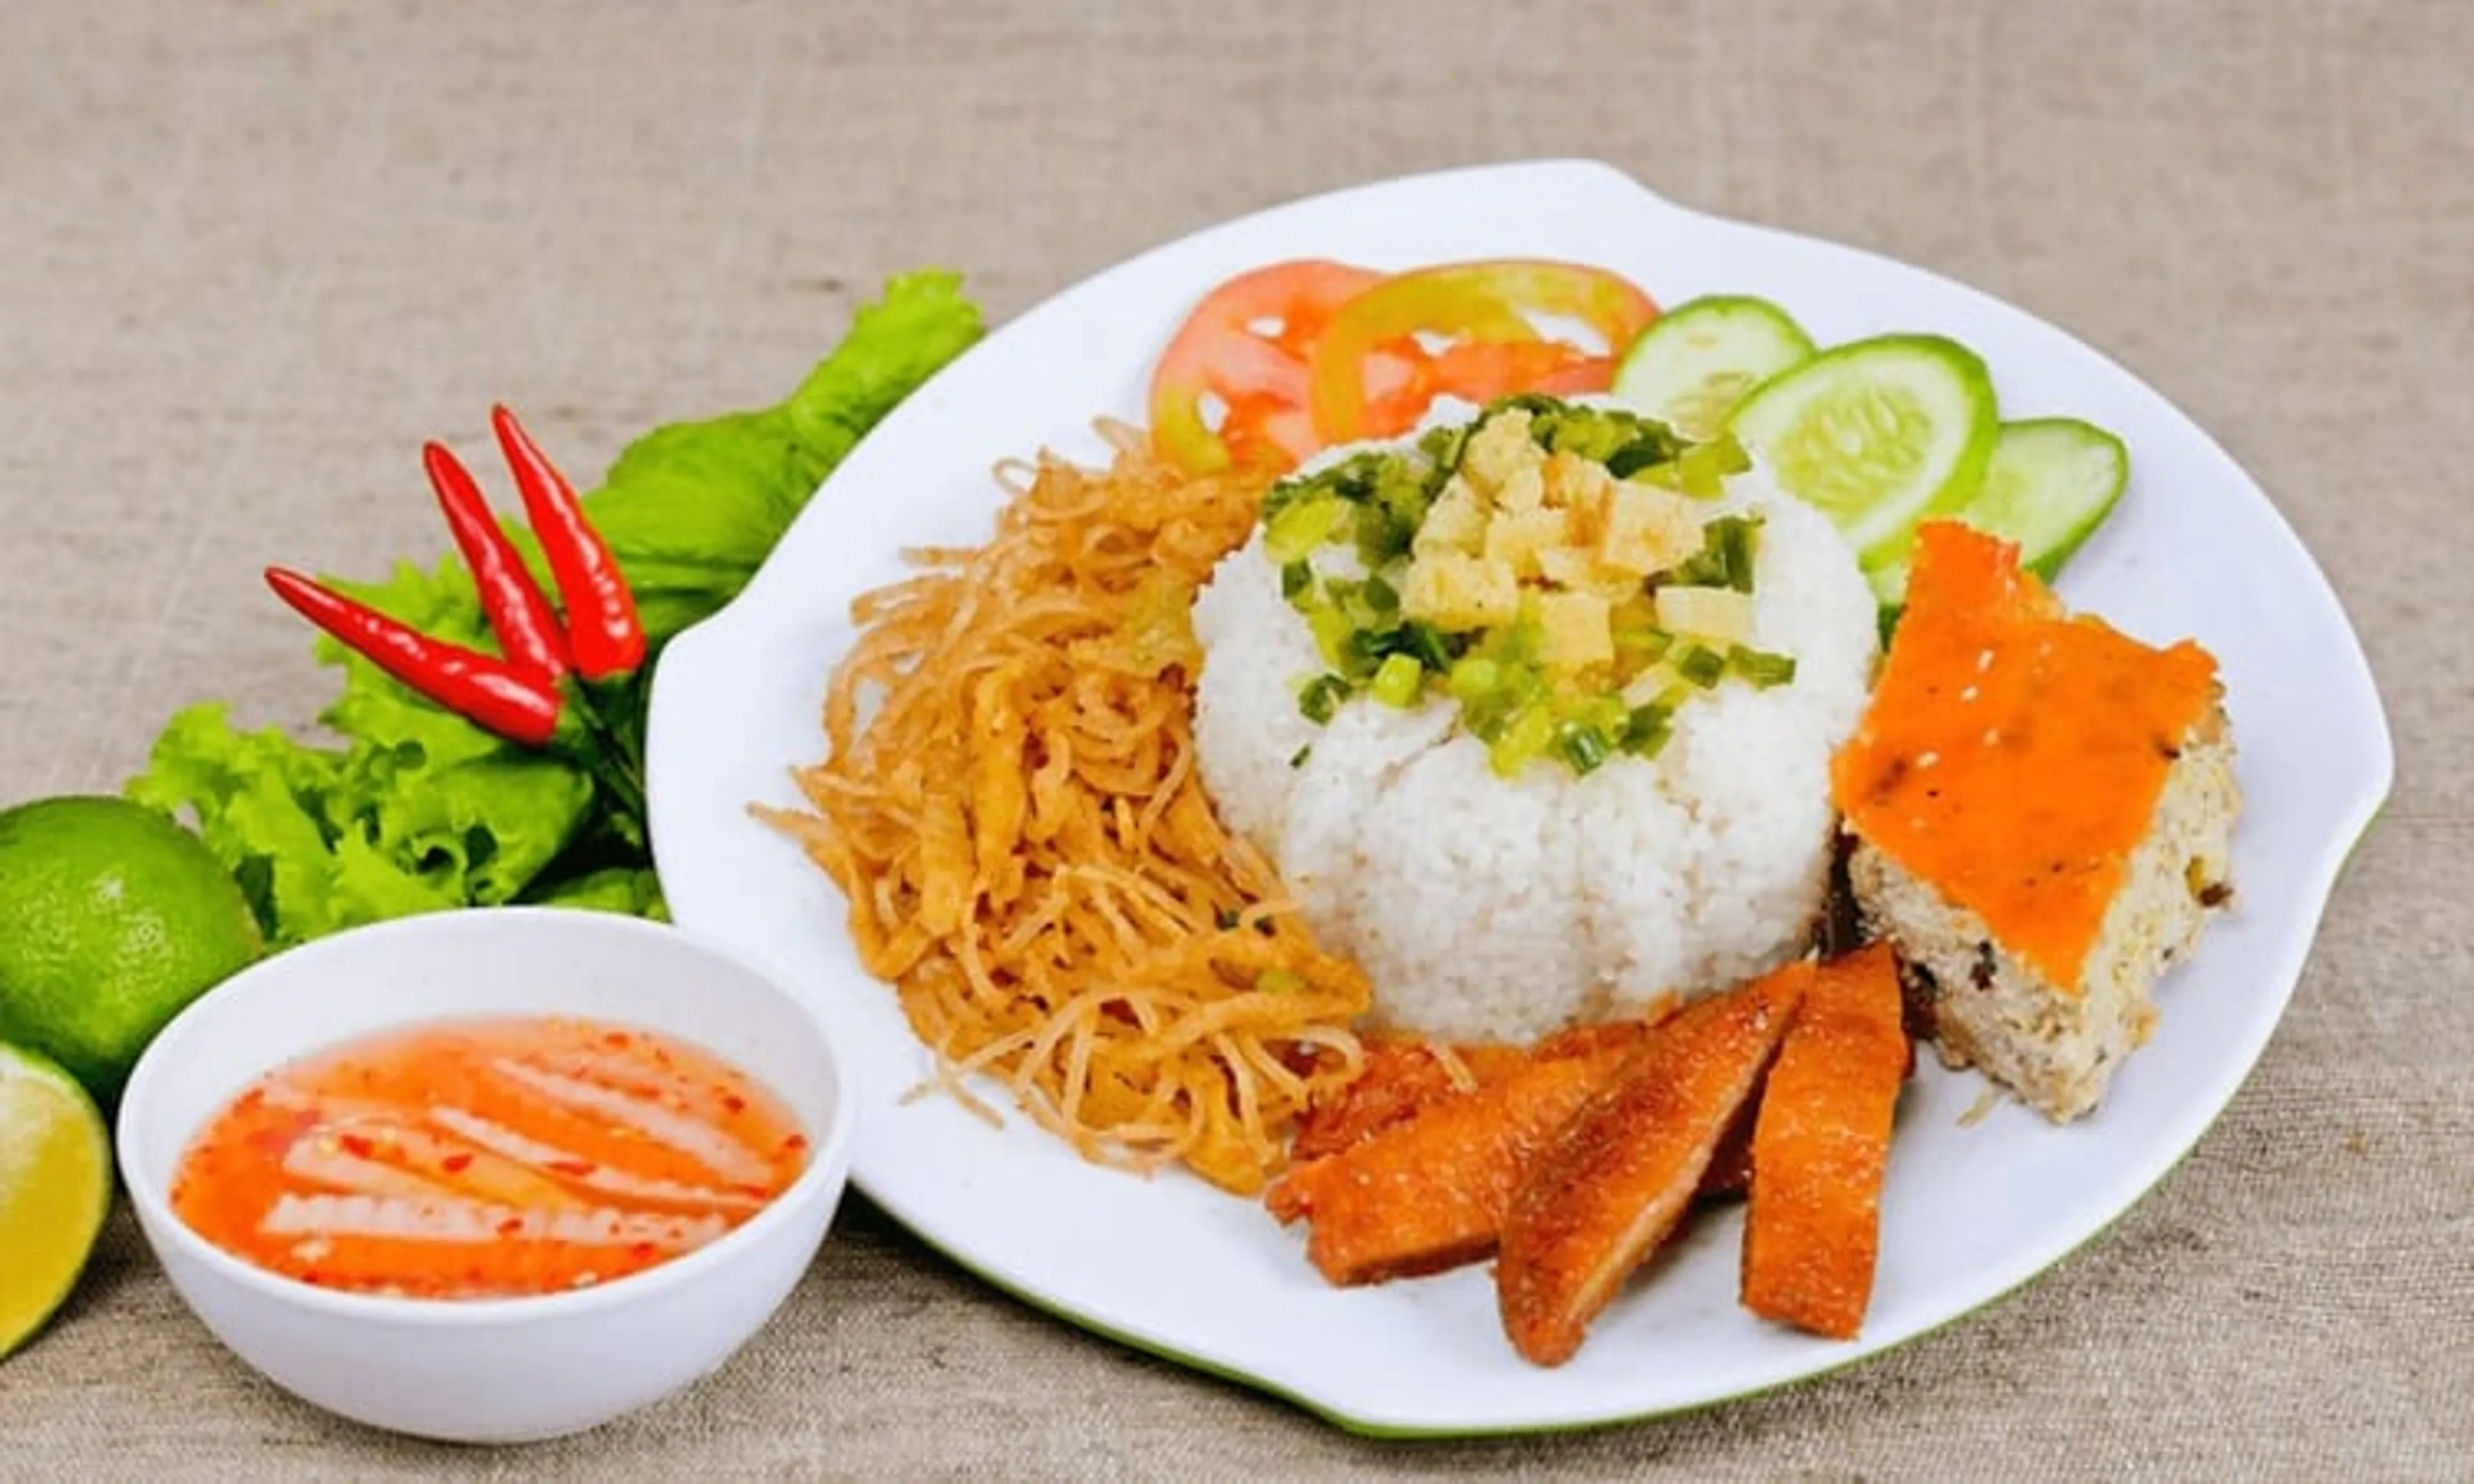 Delicious broken rice restaurants in Da Nang You must definitely enjoy